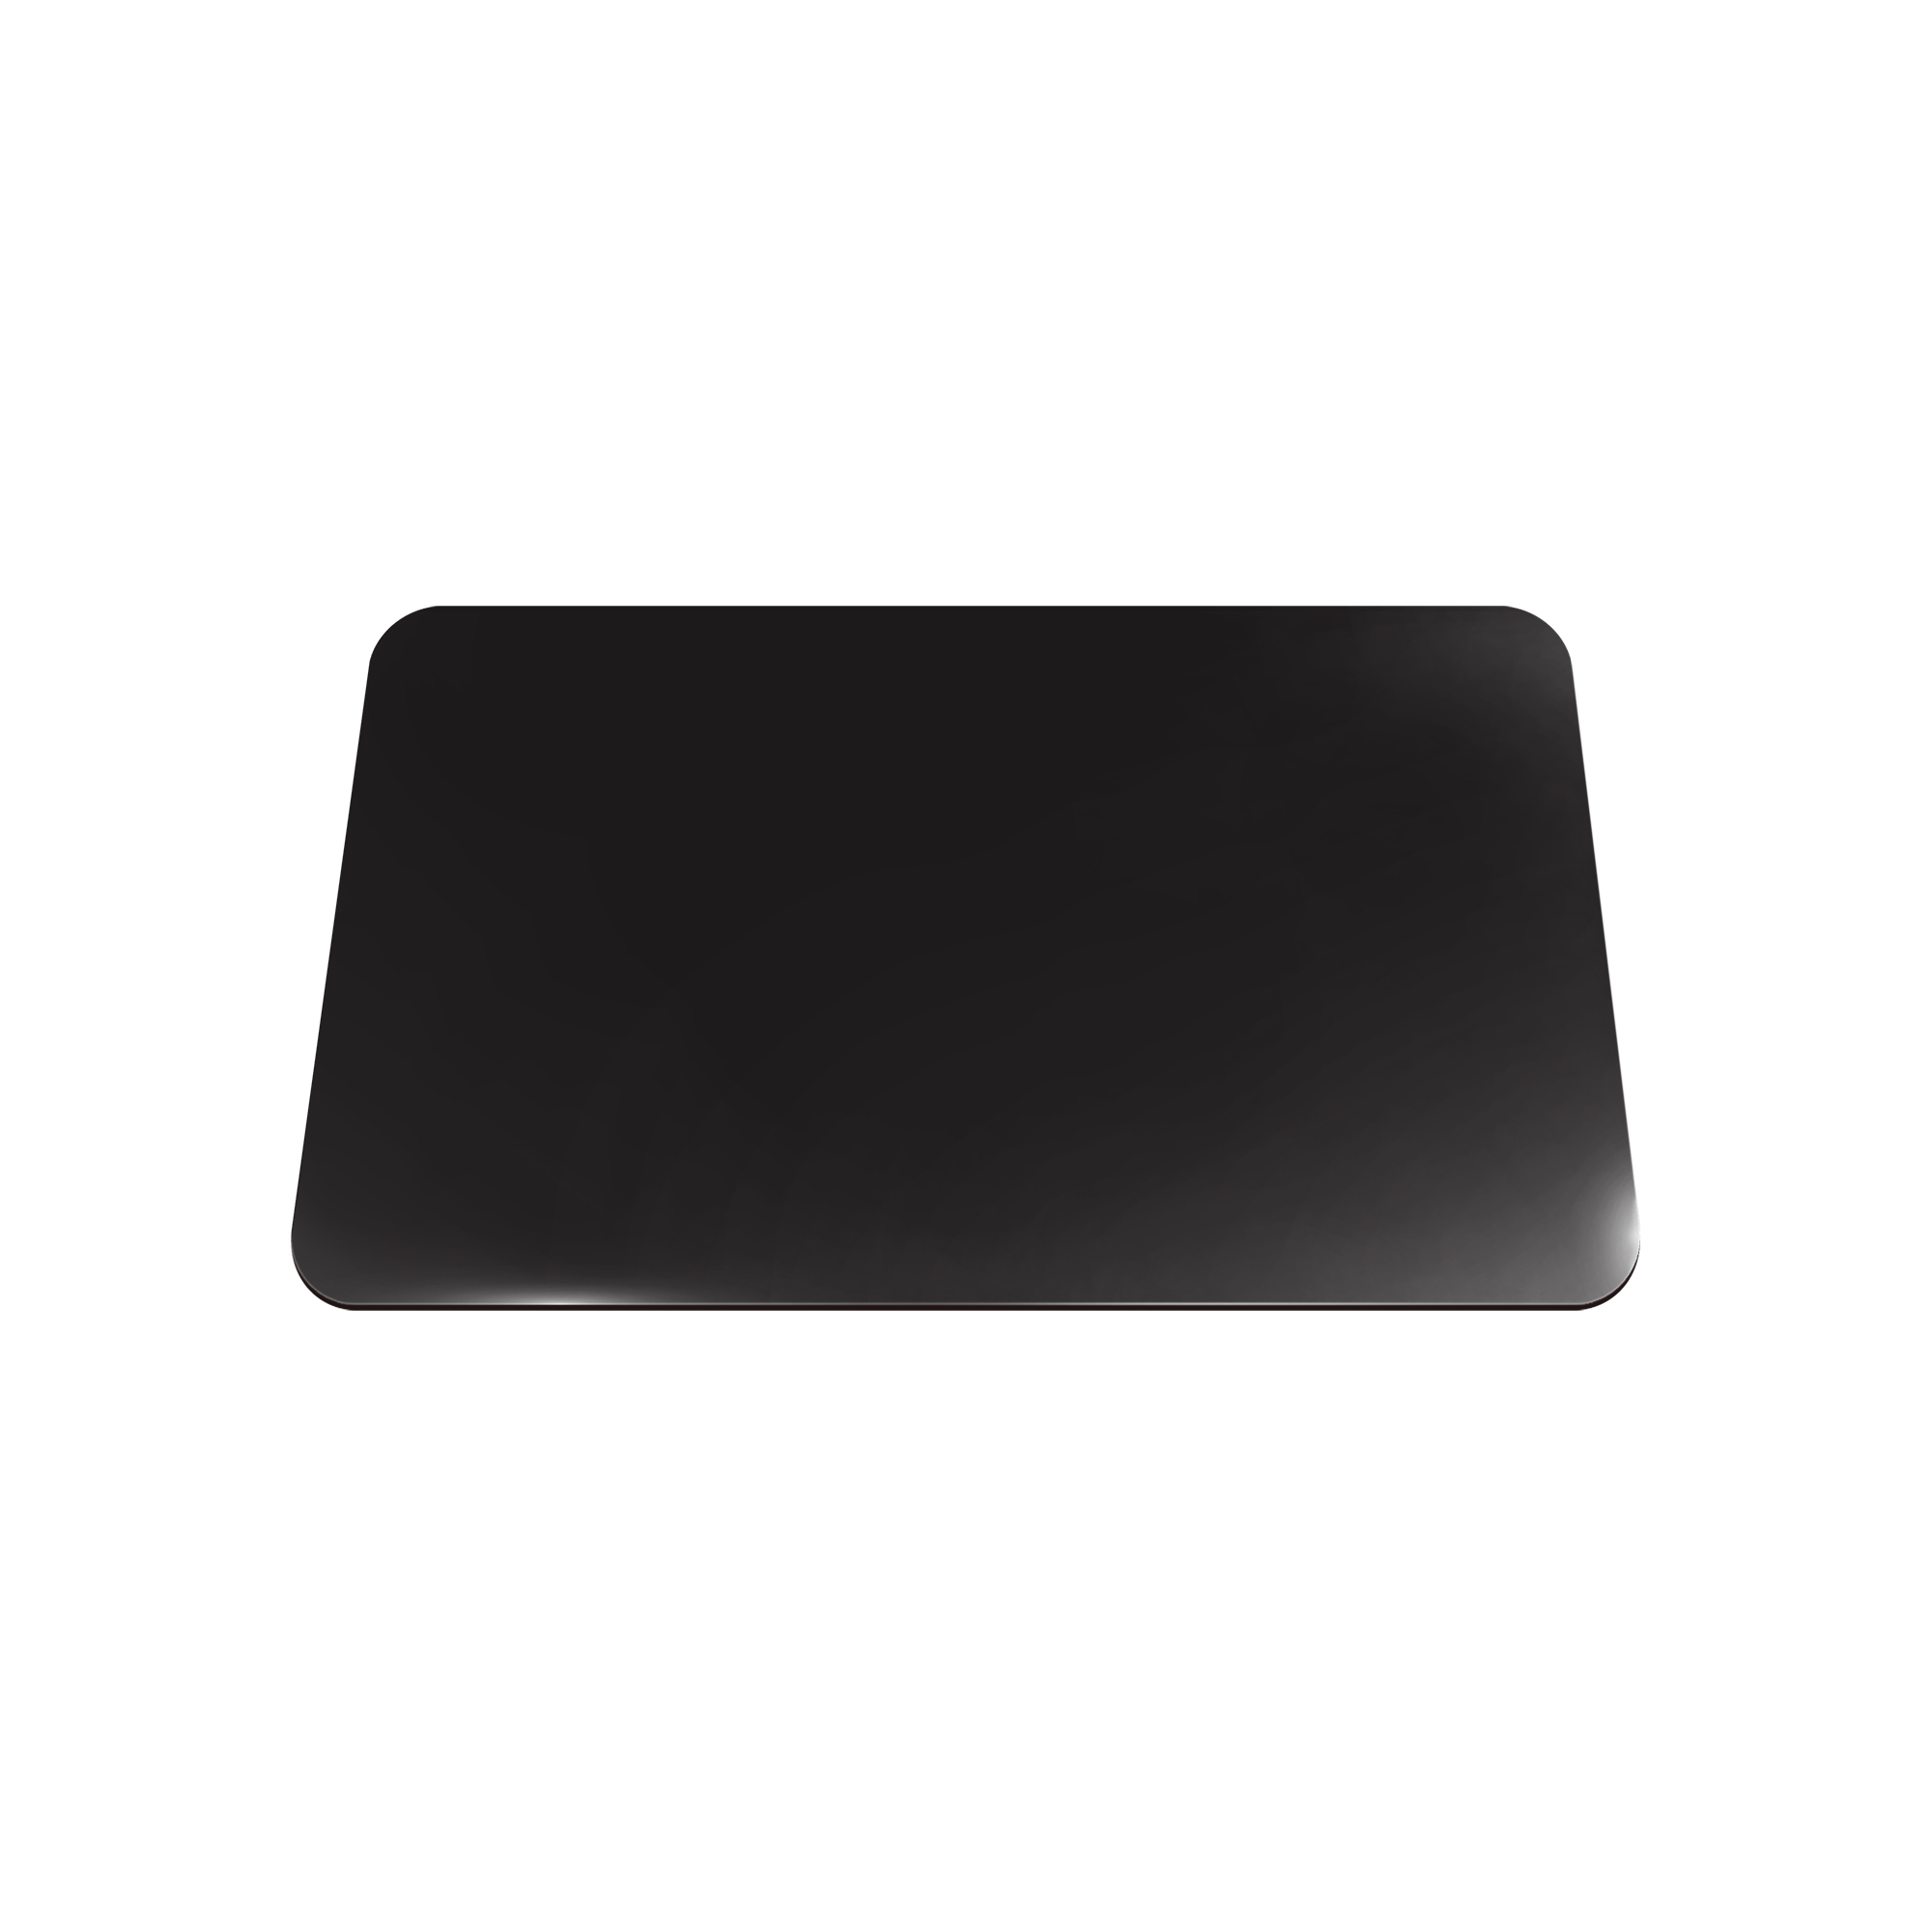 Aleco ES Robbins, Black Rectangle Desk Pad, 36Inchx20Inch, Length 20 in, Width 36 in, Material Vinyl, Model 120758